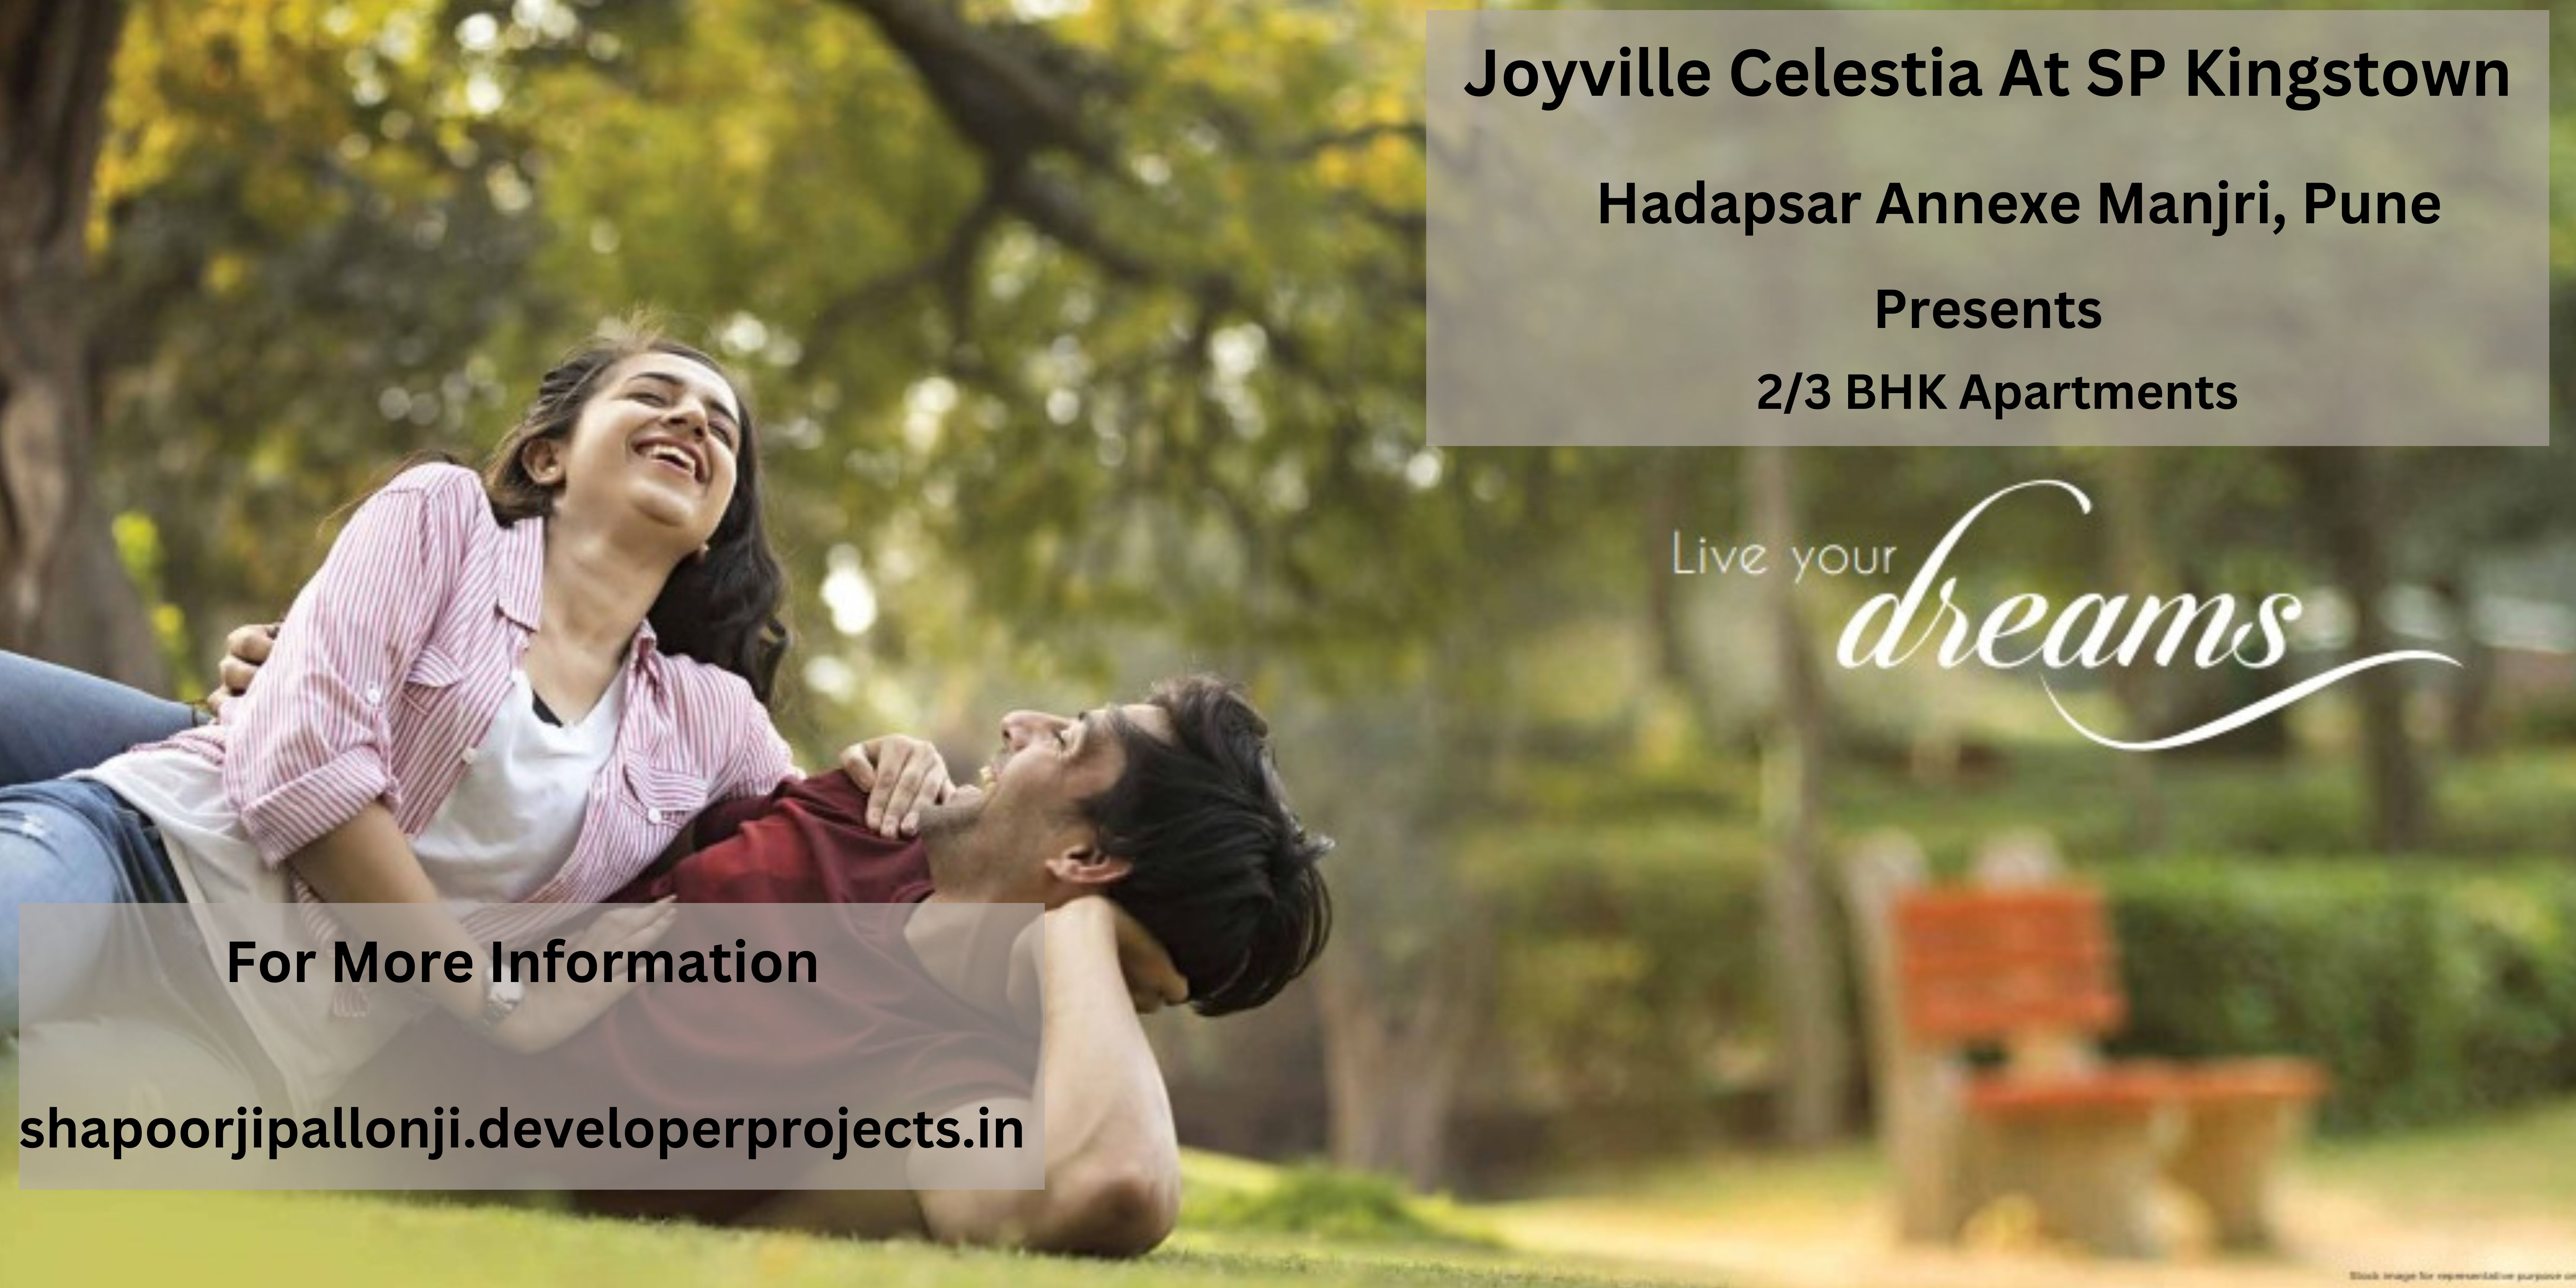 Shapoorji Joyville Celestia Annexe Pune | The Perfect Place To Build Your Dream Home